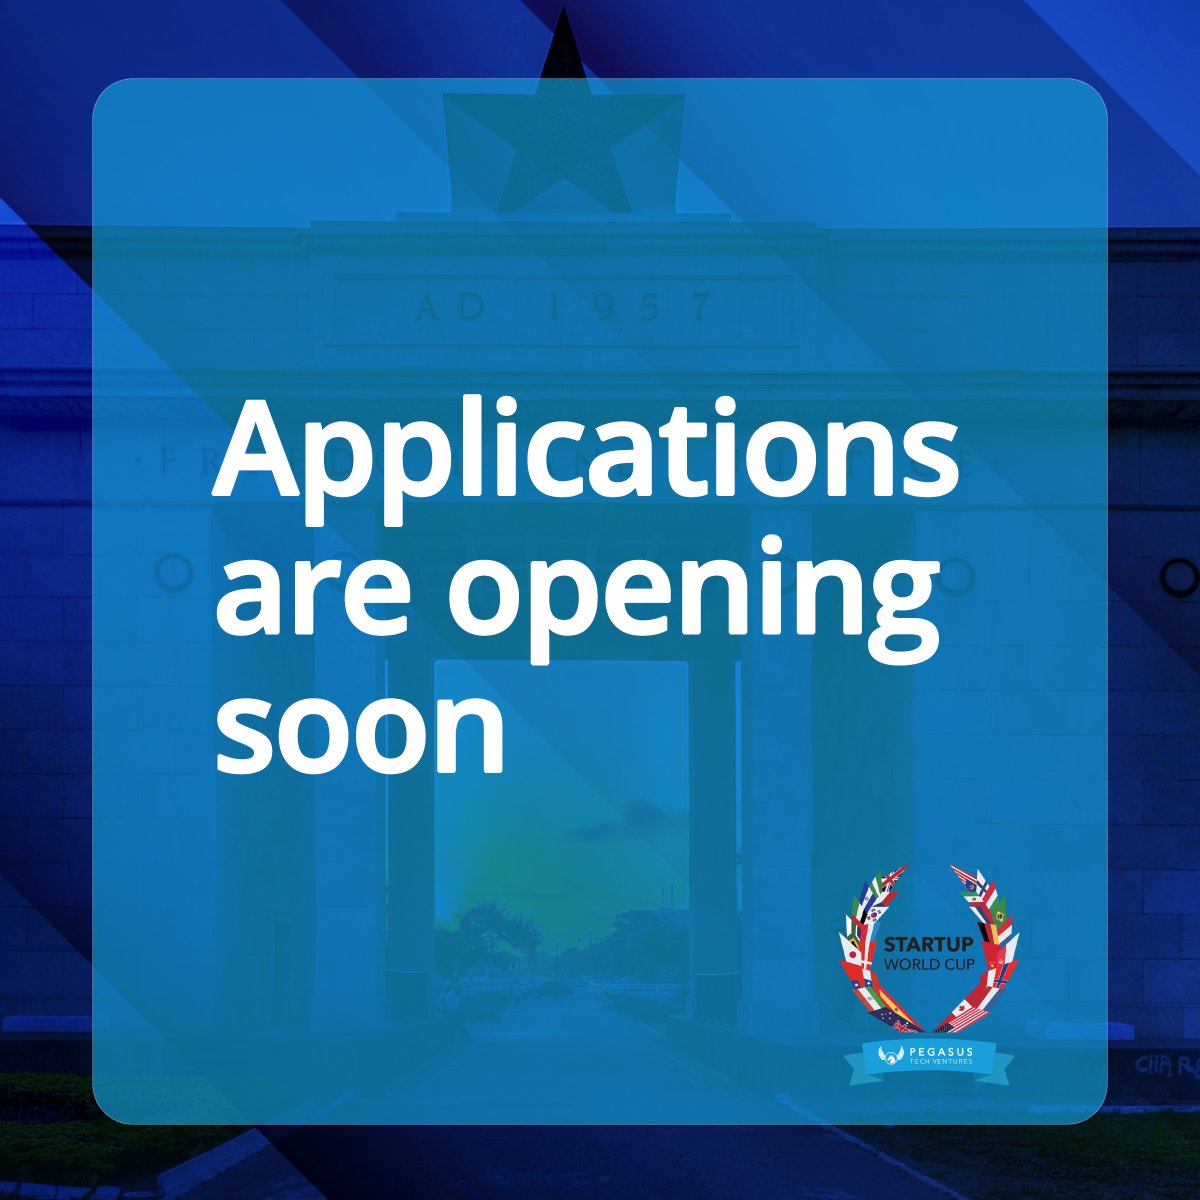 @startupwcghana opens applications soon!

#applications #openingsoon #ourdatatoday #forthefuture #startup #pegasusp #pitch #funding #startupworldcup #startupghana #innovation #entrepreneurship #startupWCghana #SWC #SWC2024